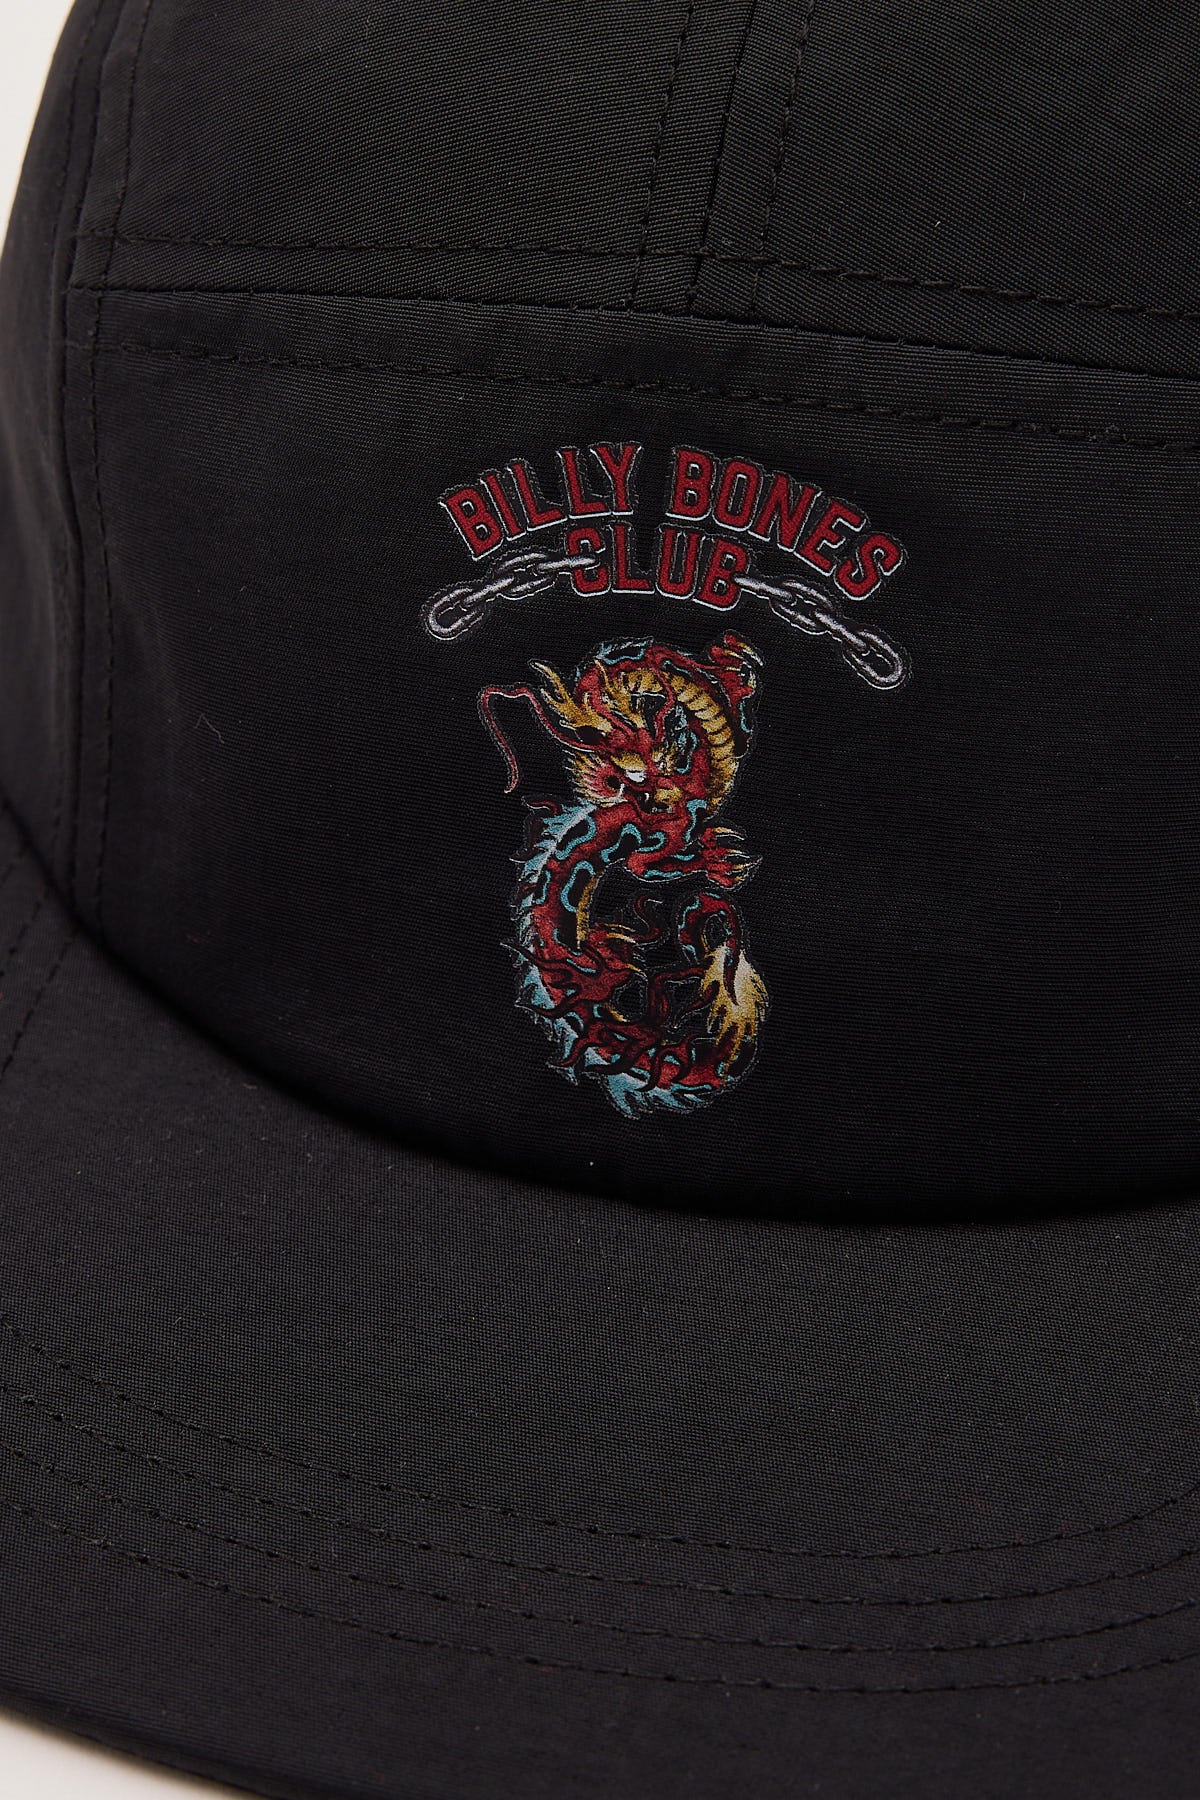 Billy Bones Club Dragon 5 Panel Cap Black